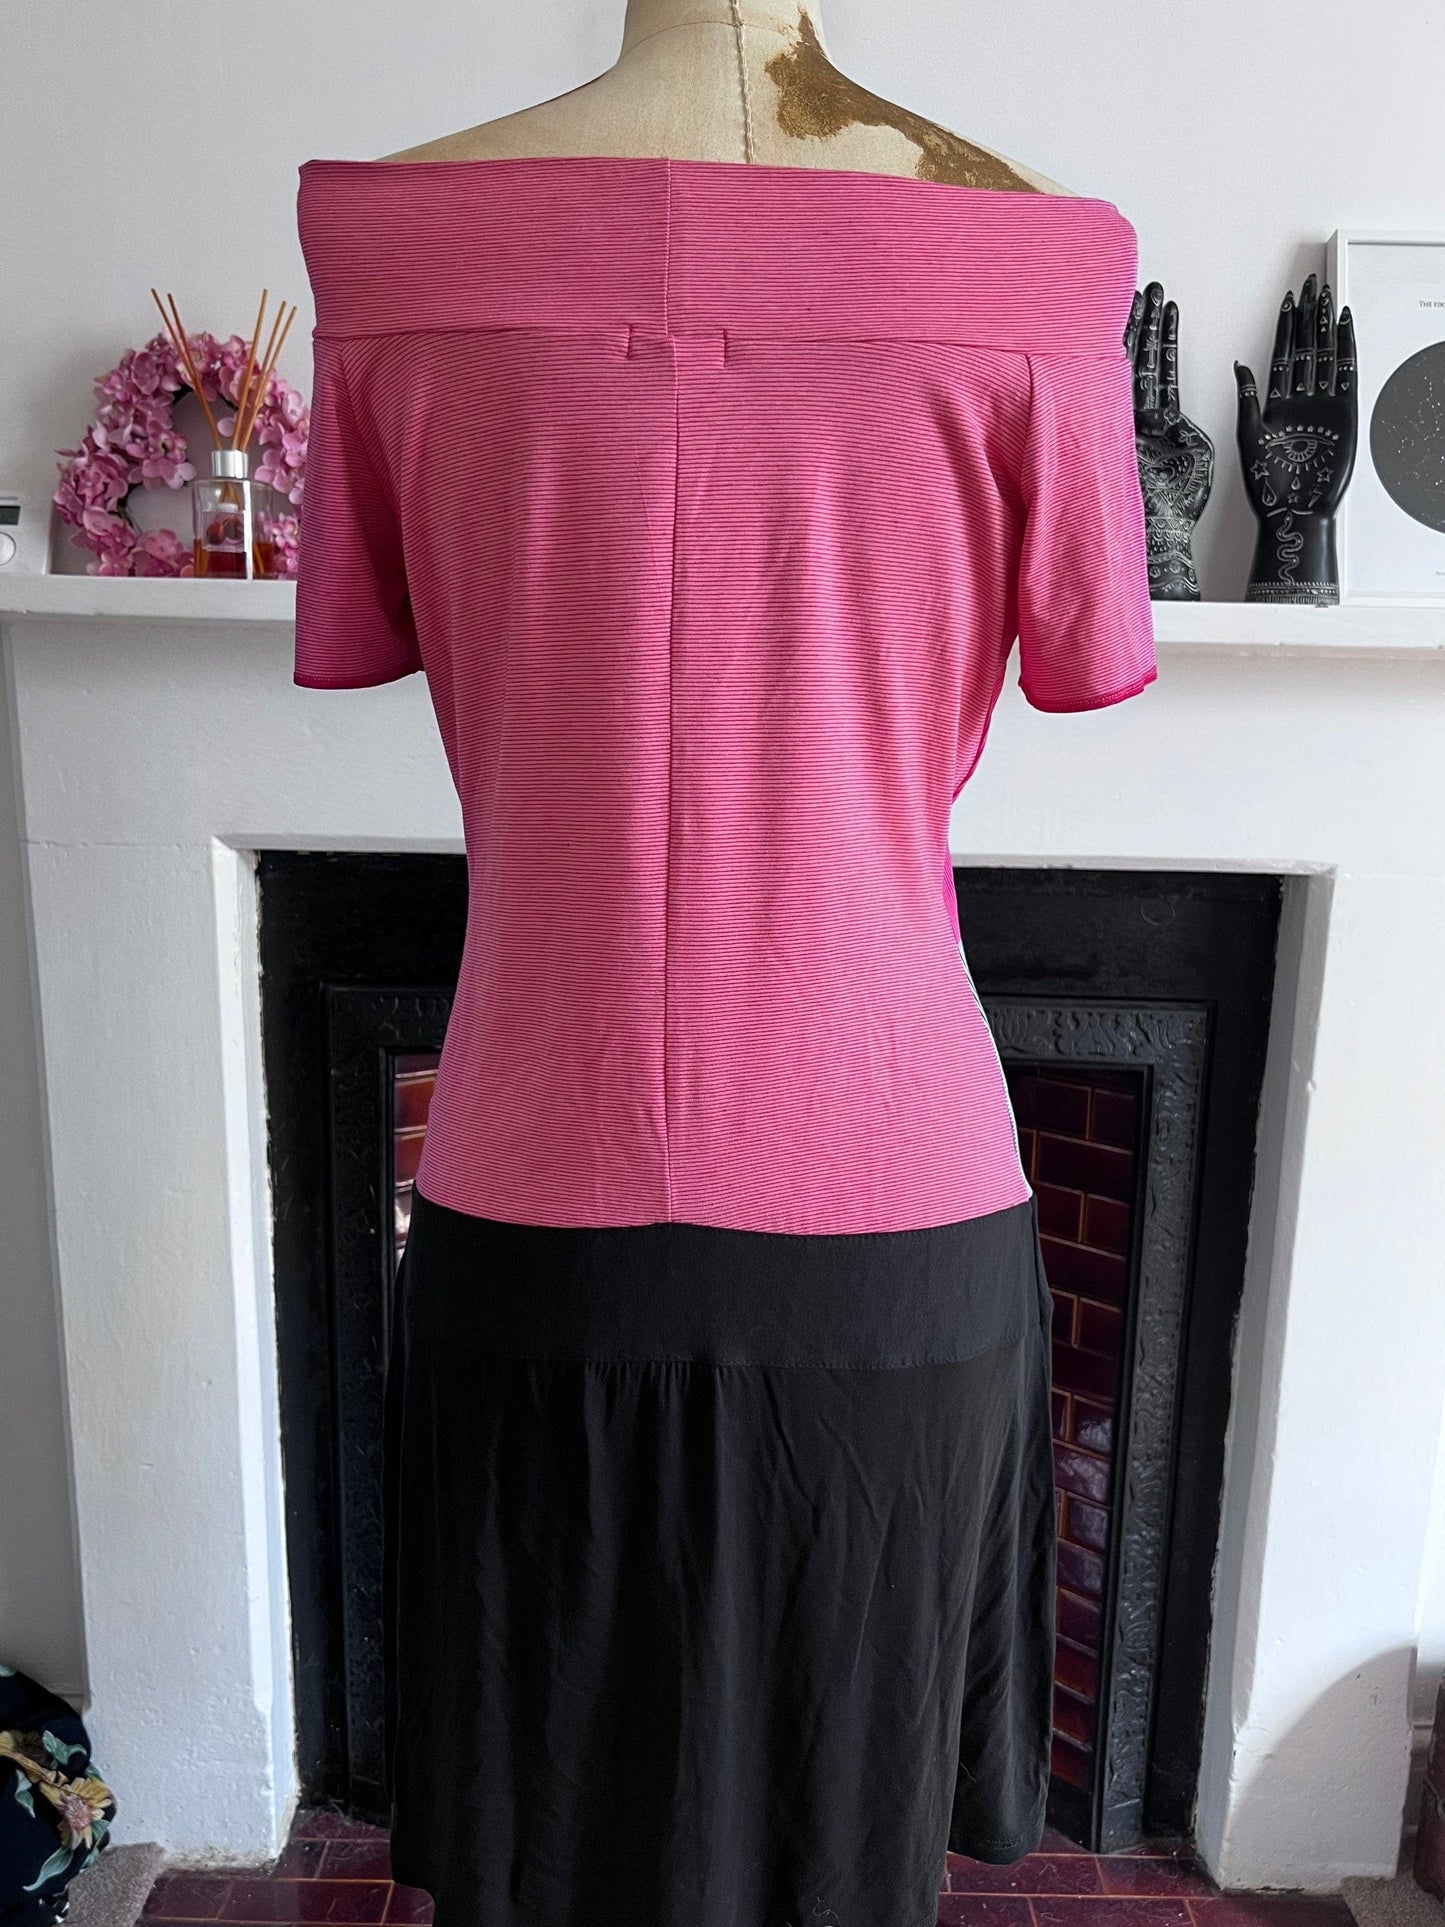 Pink Black Vintage Jersey Dress - Sunbathing Lady Dress - Off the shoulder summer dress in cute jersey fabric